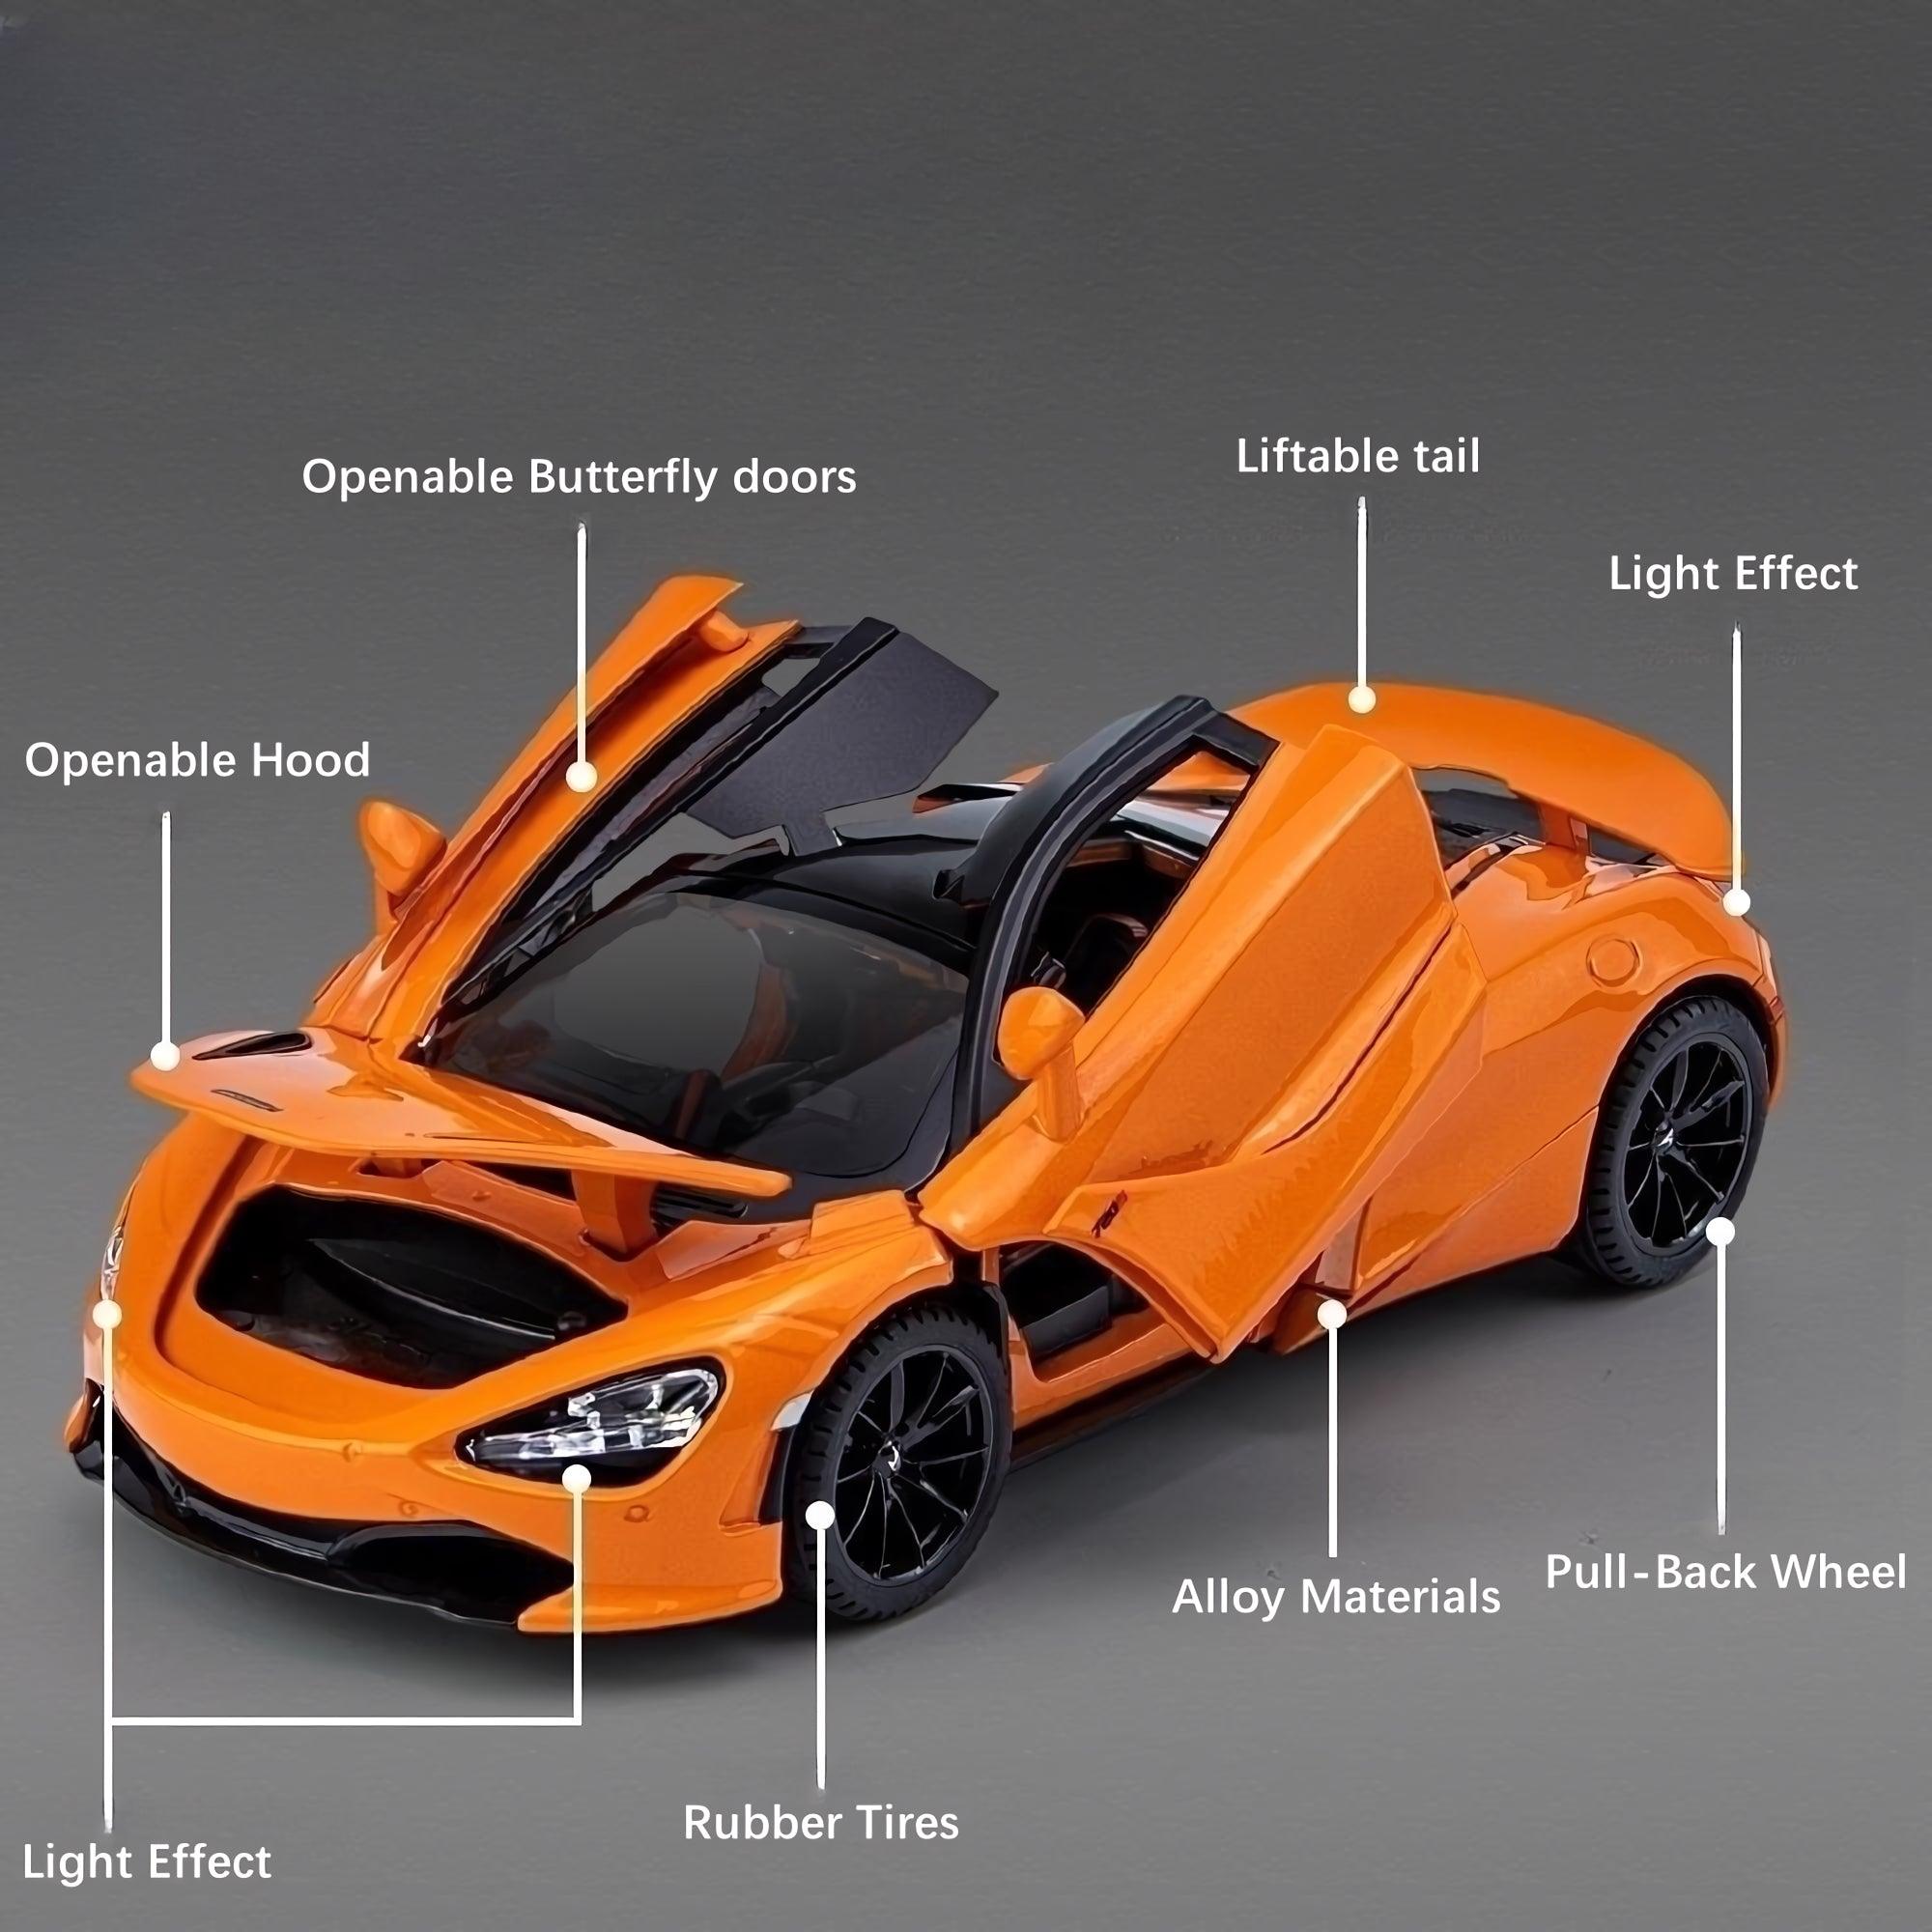 1:24 Scale McLaren 720s Die-Cast Model Car - PANSEKtoy